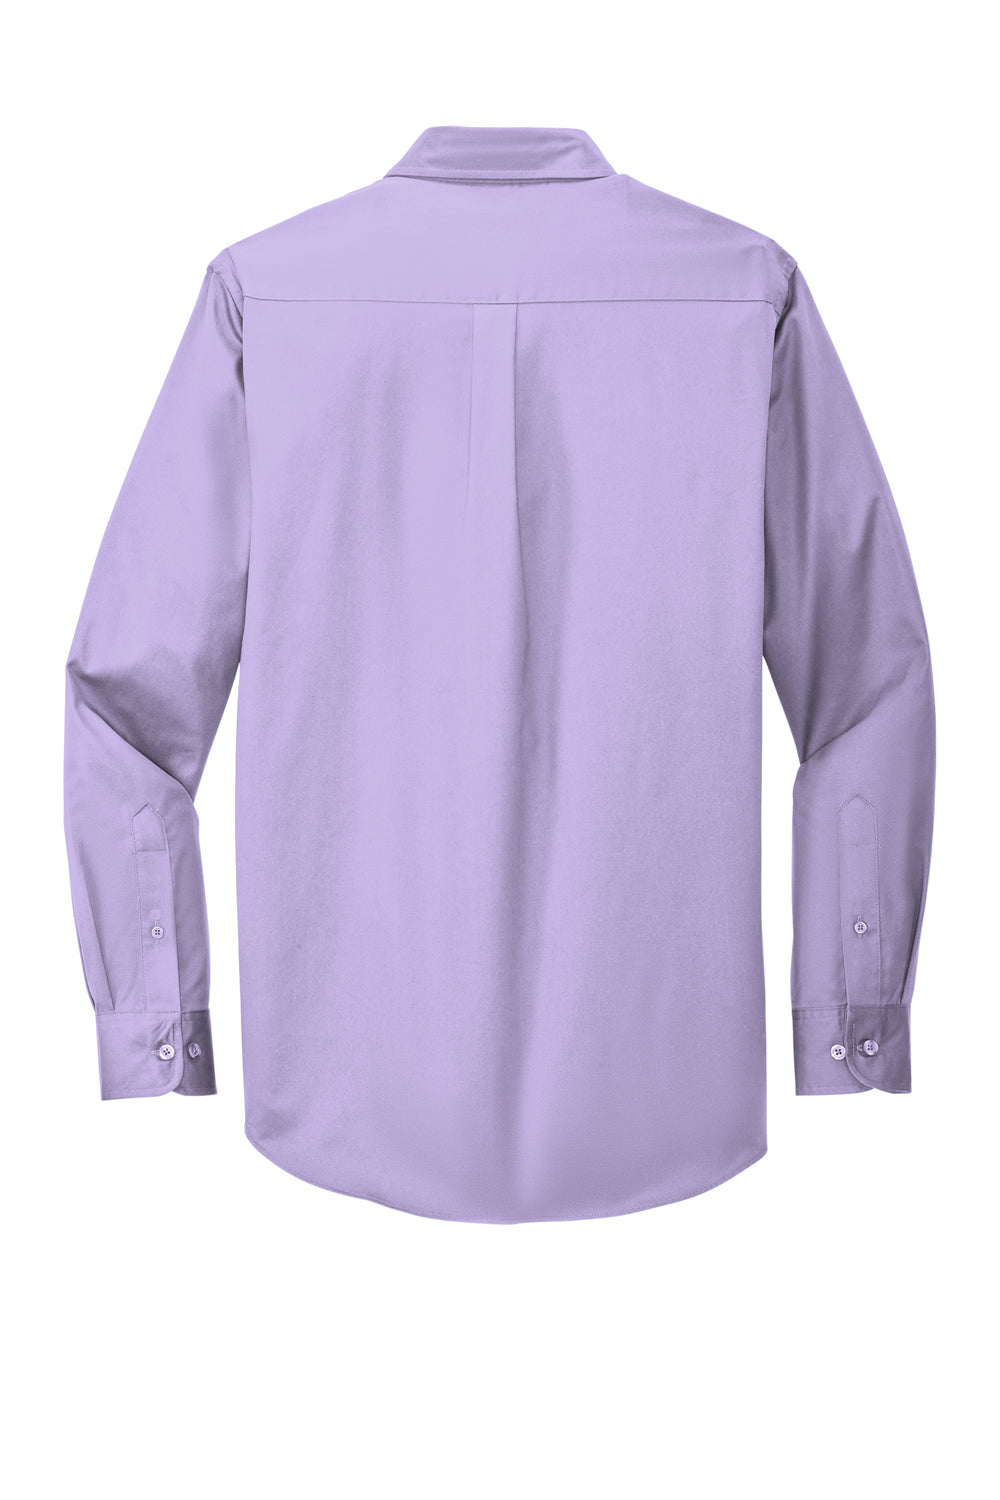 Port Authority S608/TLS608/S608ES Mens Easy Care Wrinkle Resistant Long Sleeve Button Down Shirt w/ Pocket Bright Lavender Purple Flat Back